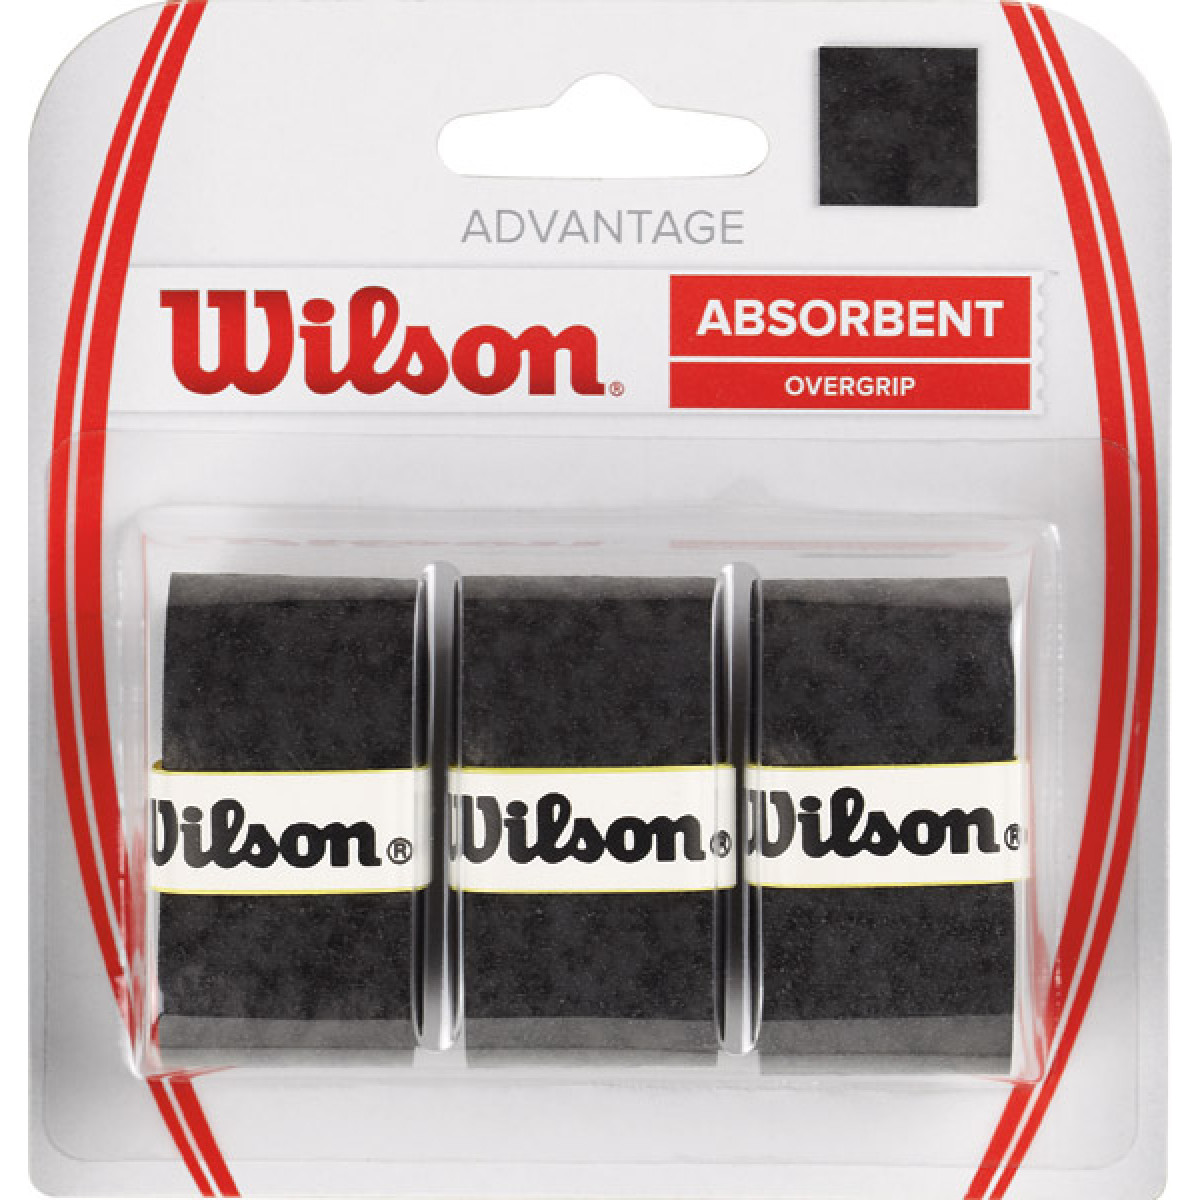 WILSON ADVANTAGE ABSORBENT OVERGRIP - WILSON - Racquet Accessories -  Accessories